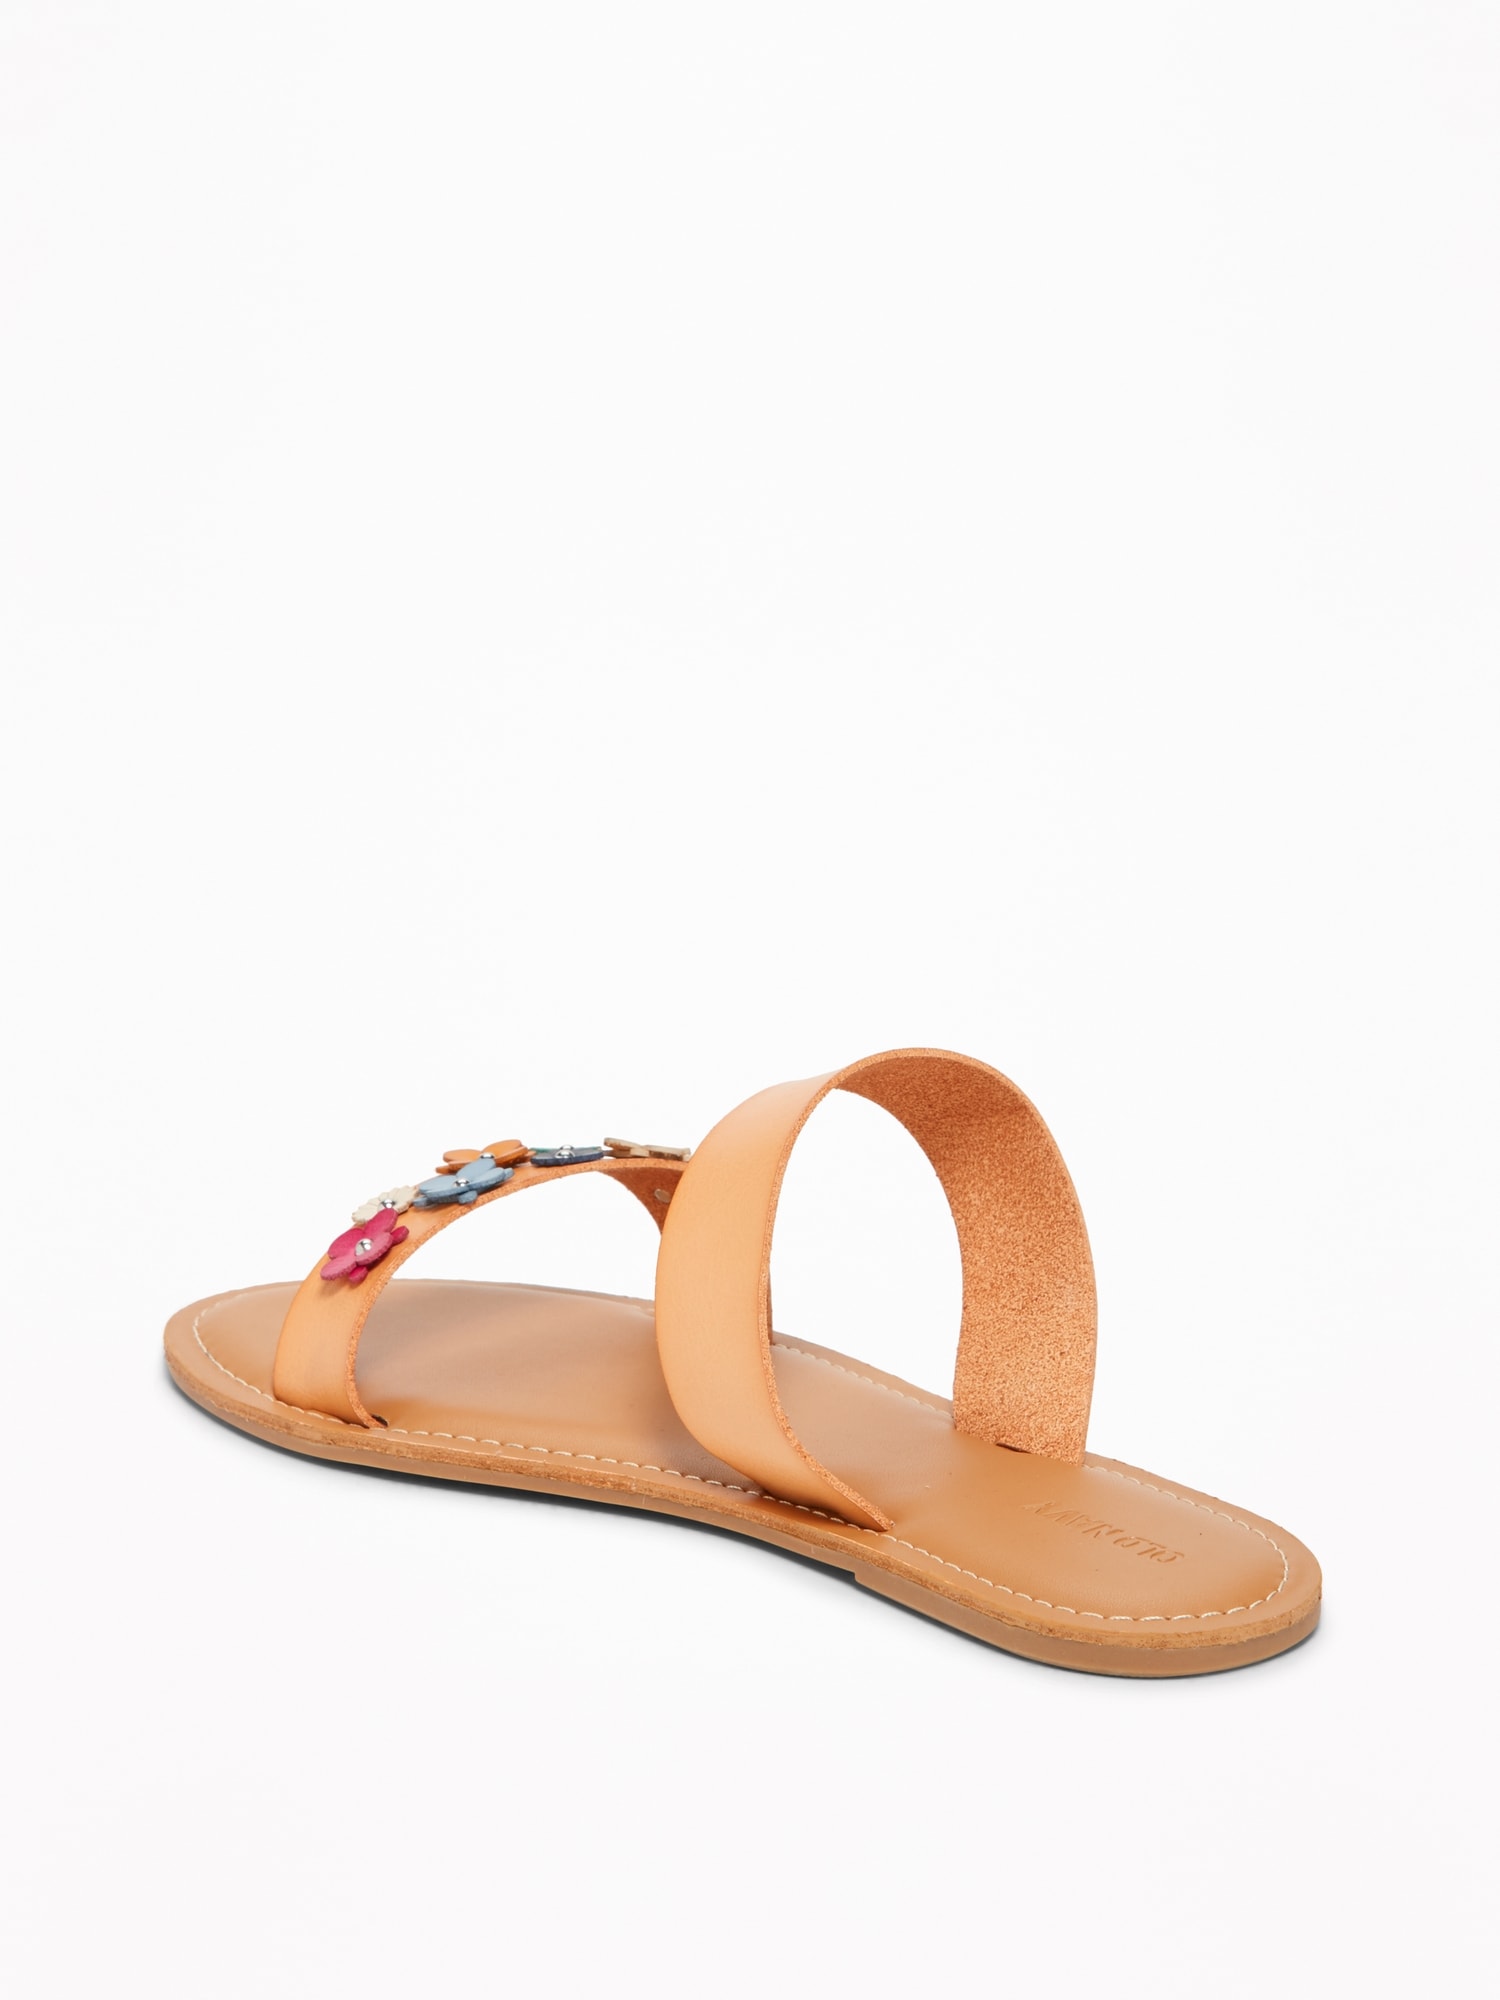 Flower-Applique Double-Strap Sandals for Women | Old Navy